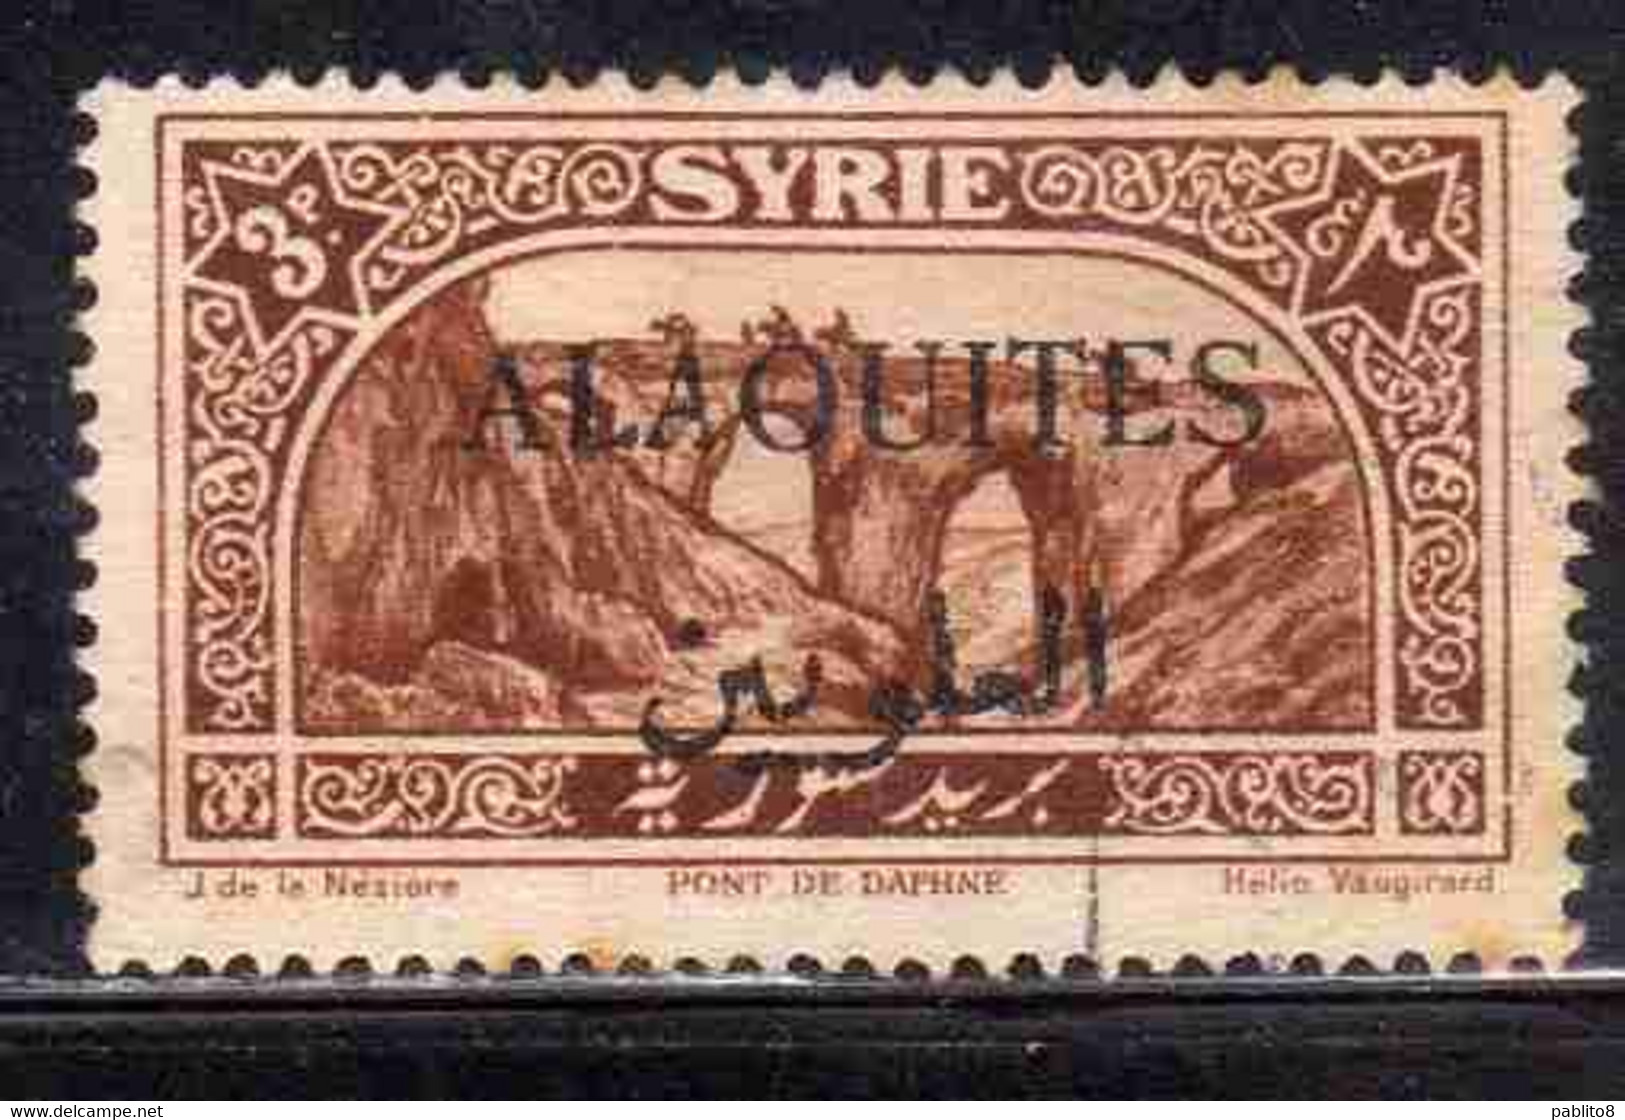 ALAOUITES SYRIA SIRIA ALAQUITES 1925 BRIDGE OF DAPHNE 3p USED USATO OBLITERE' - Usados